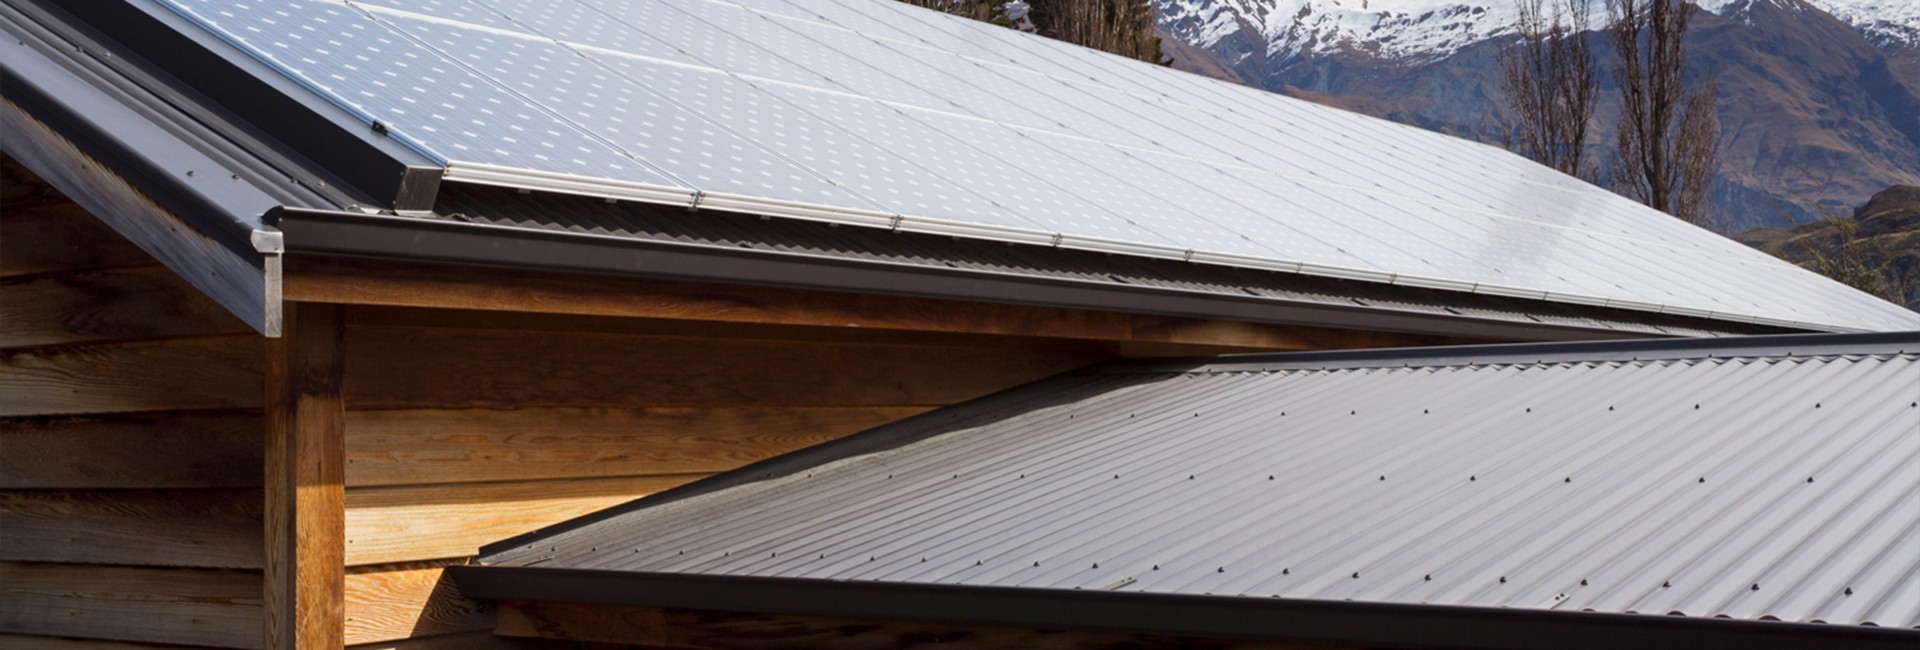 Studholme Rise Roofline Solar Panels